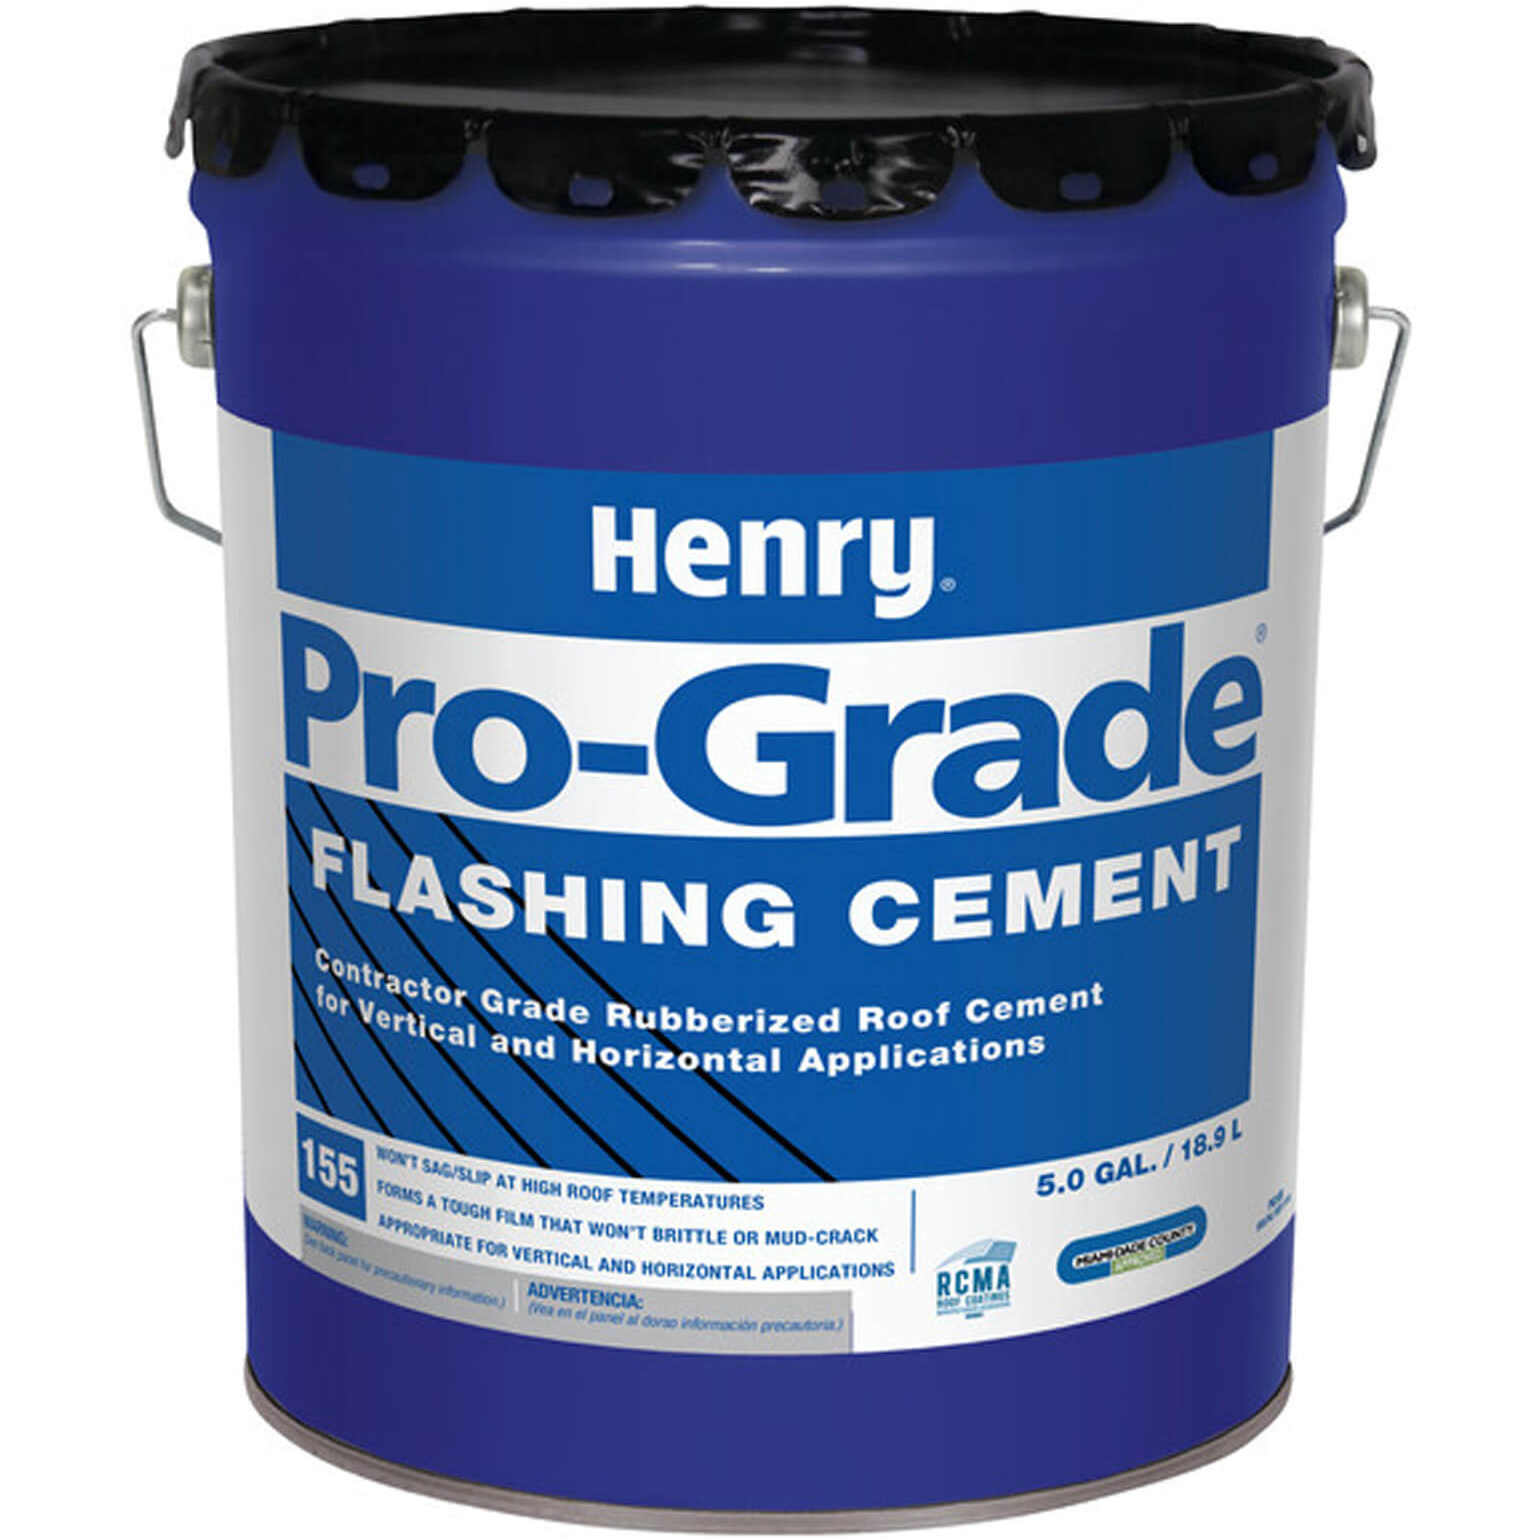 Henry Pro Grade 155 Flashing Cement